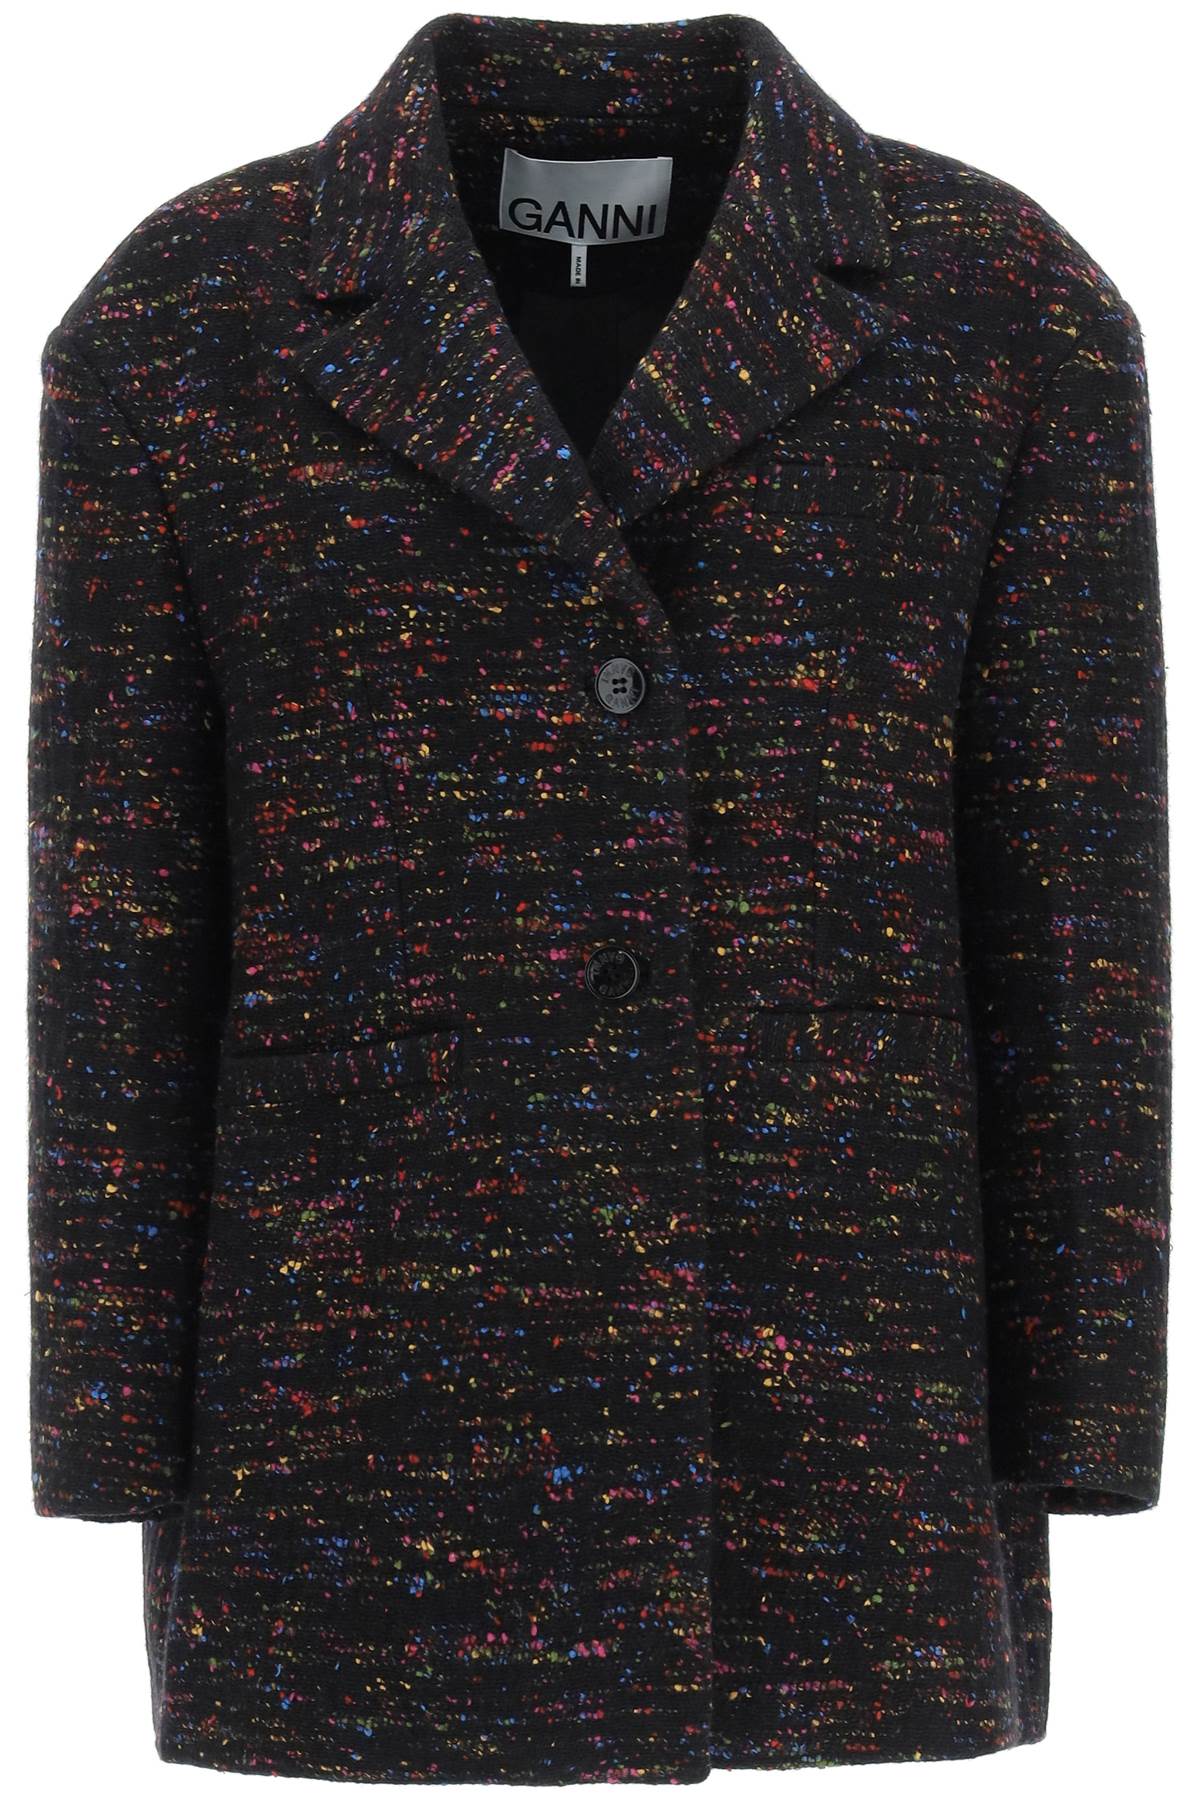 Ganni Oversized Wool Blend Tweed Jacket